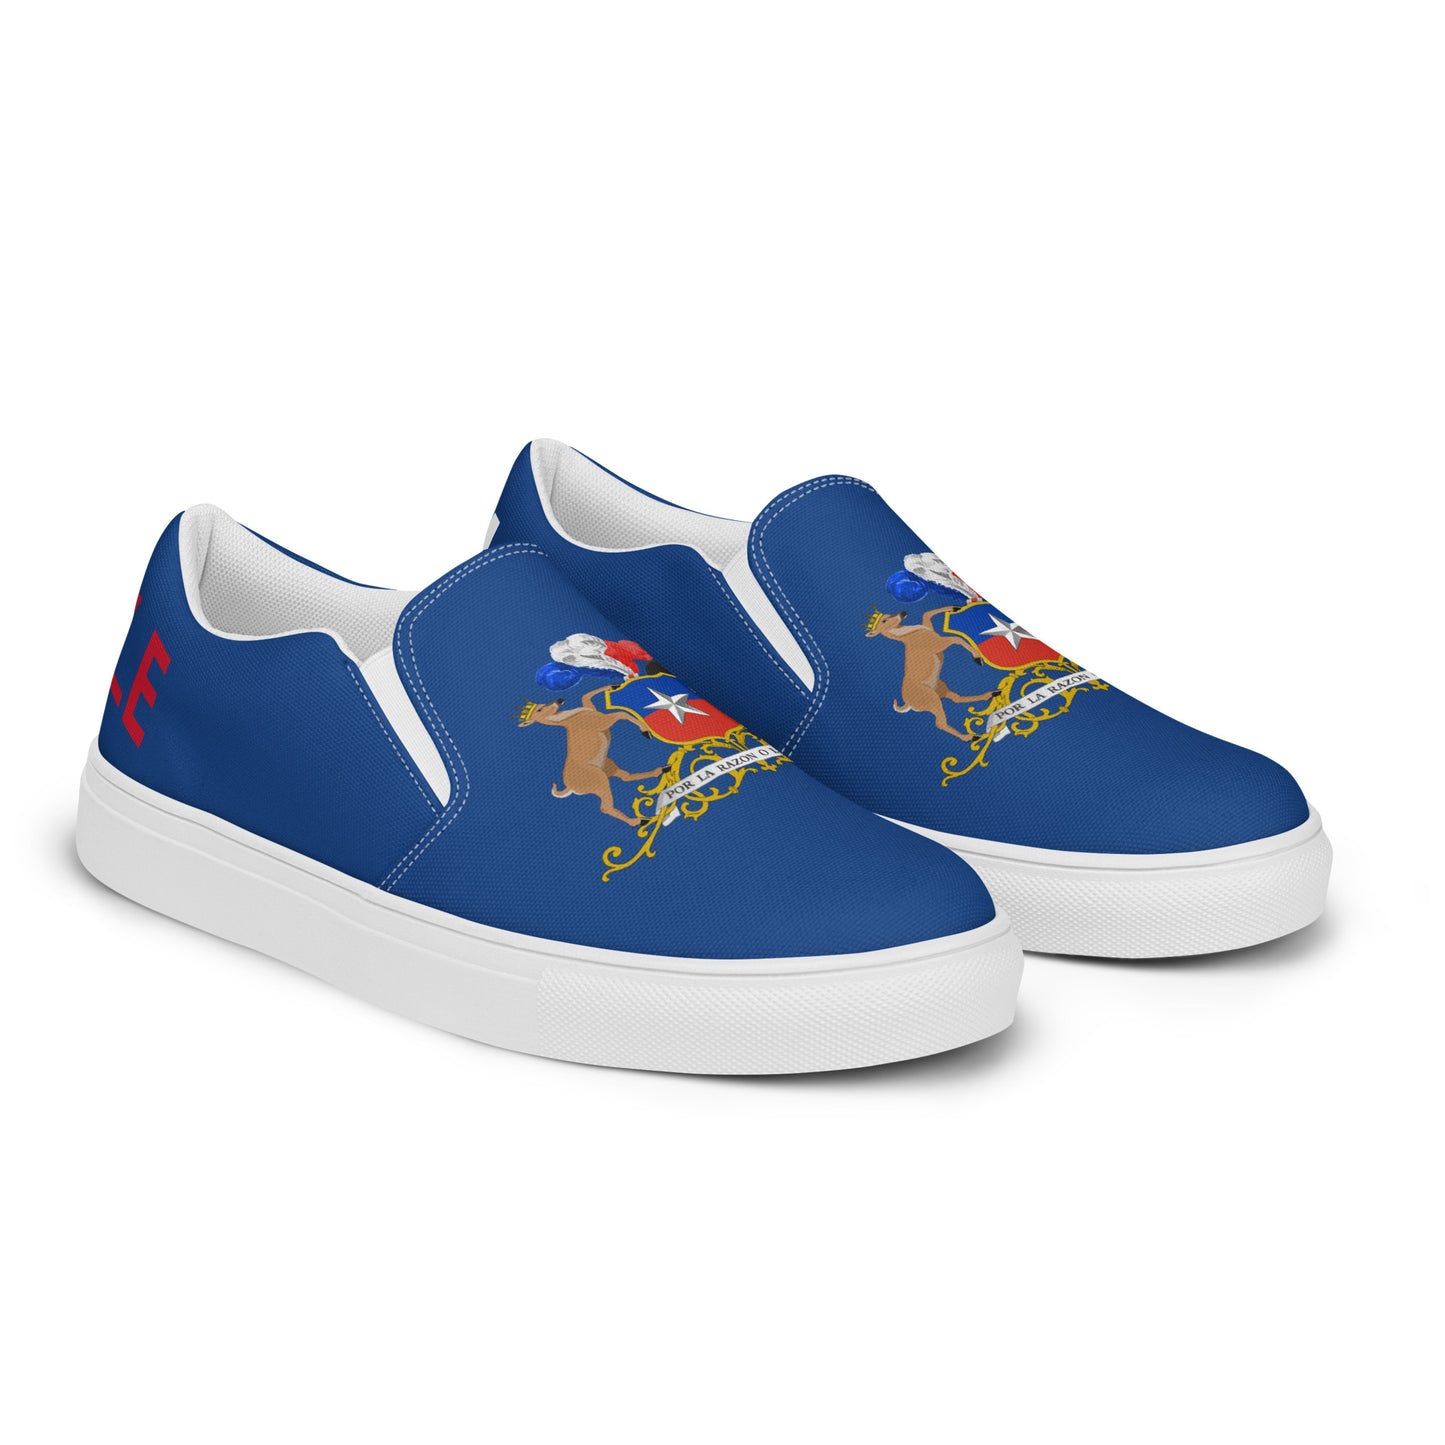 Chile - Men - Blue - Slip-on shoes